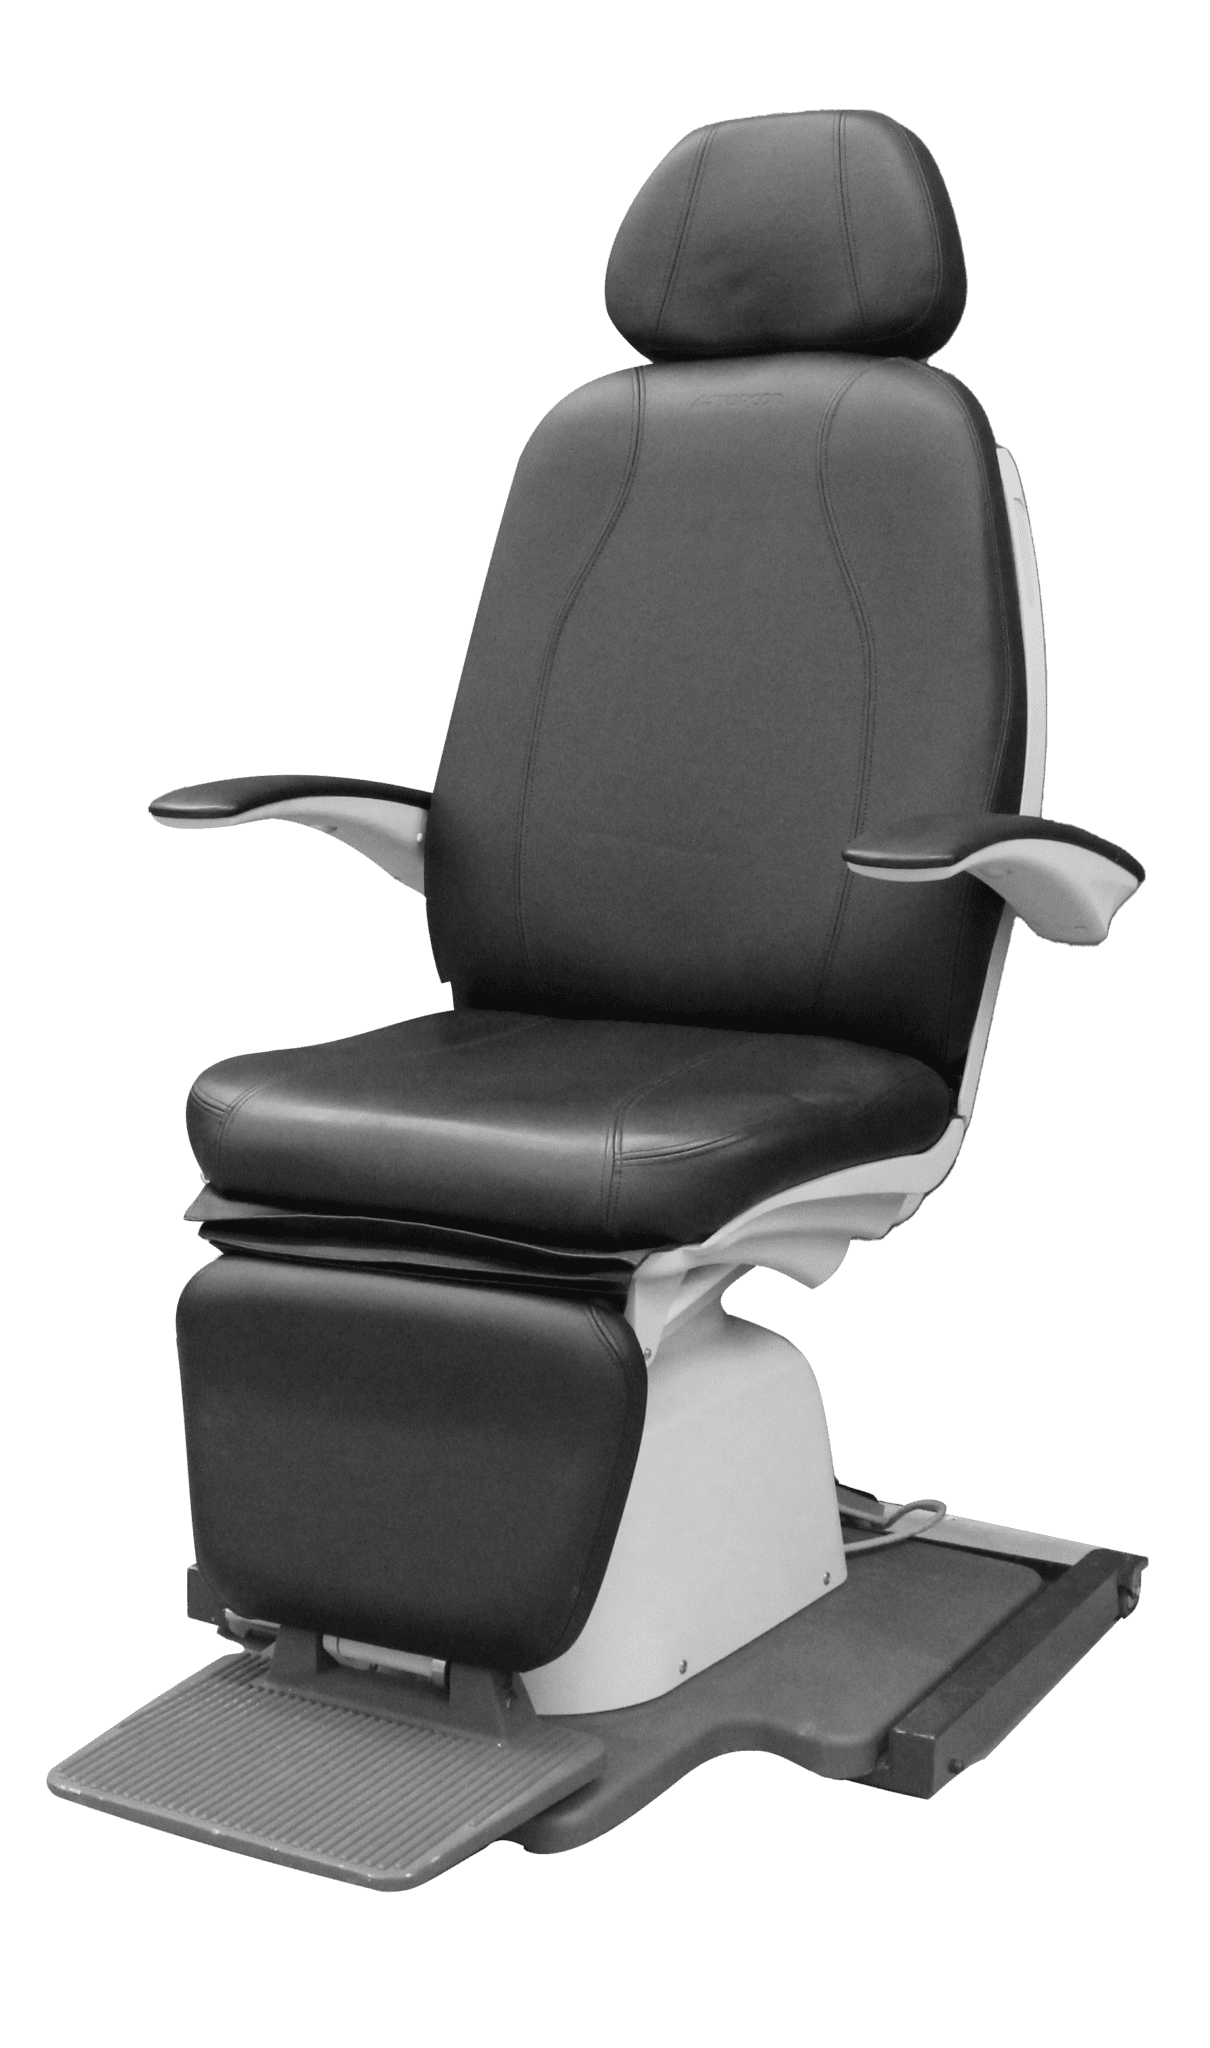 Topcon OC2200 Chair